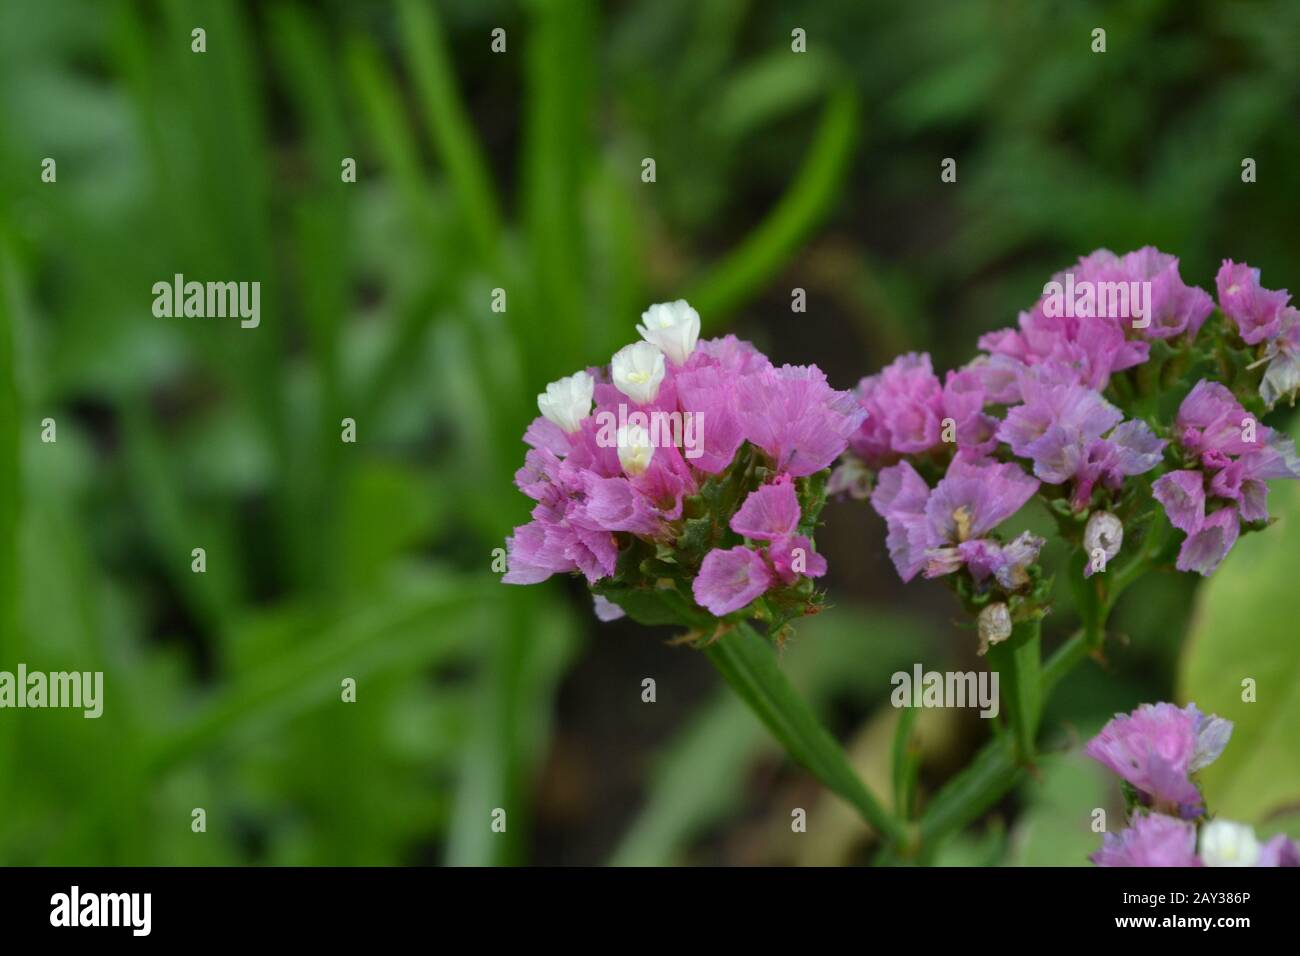 Dried flowers. Limonium sinuatum. Statice sinuata. Flower purple. Close-up. Garden. Flowerbed. Growing flowers. Horizontal Stock Photo